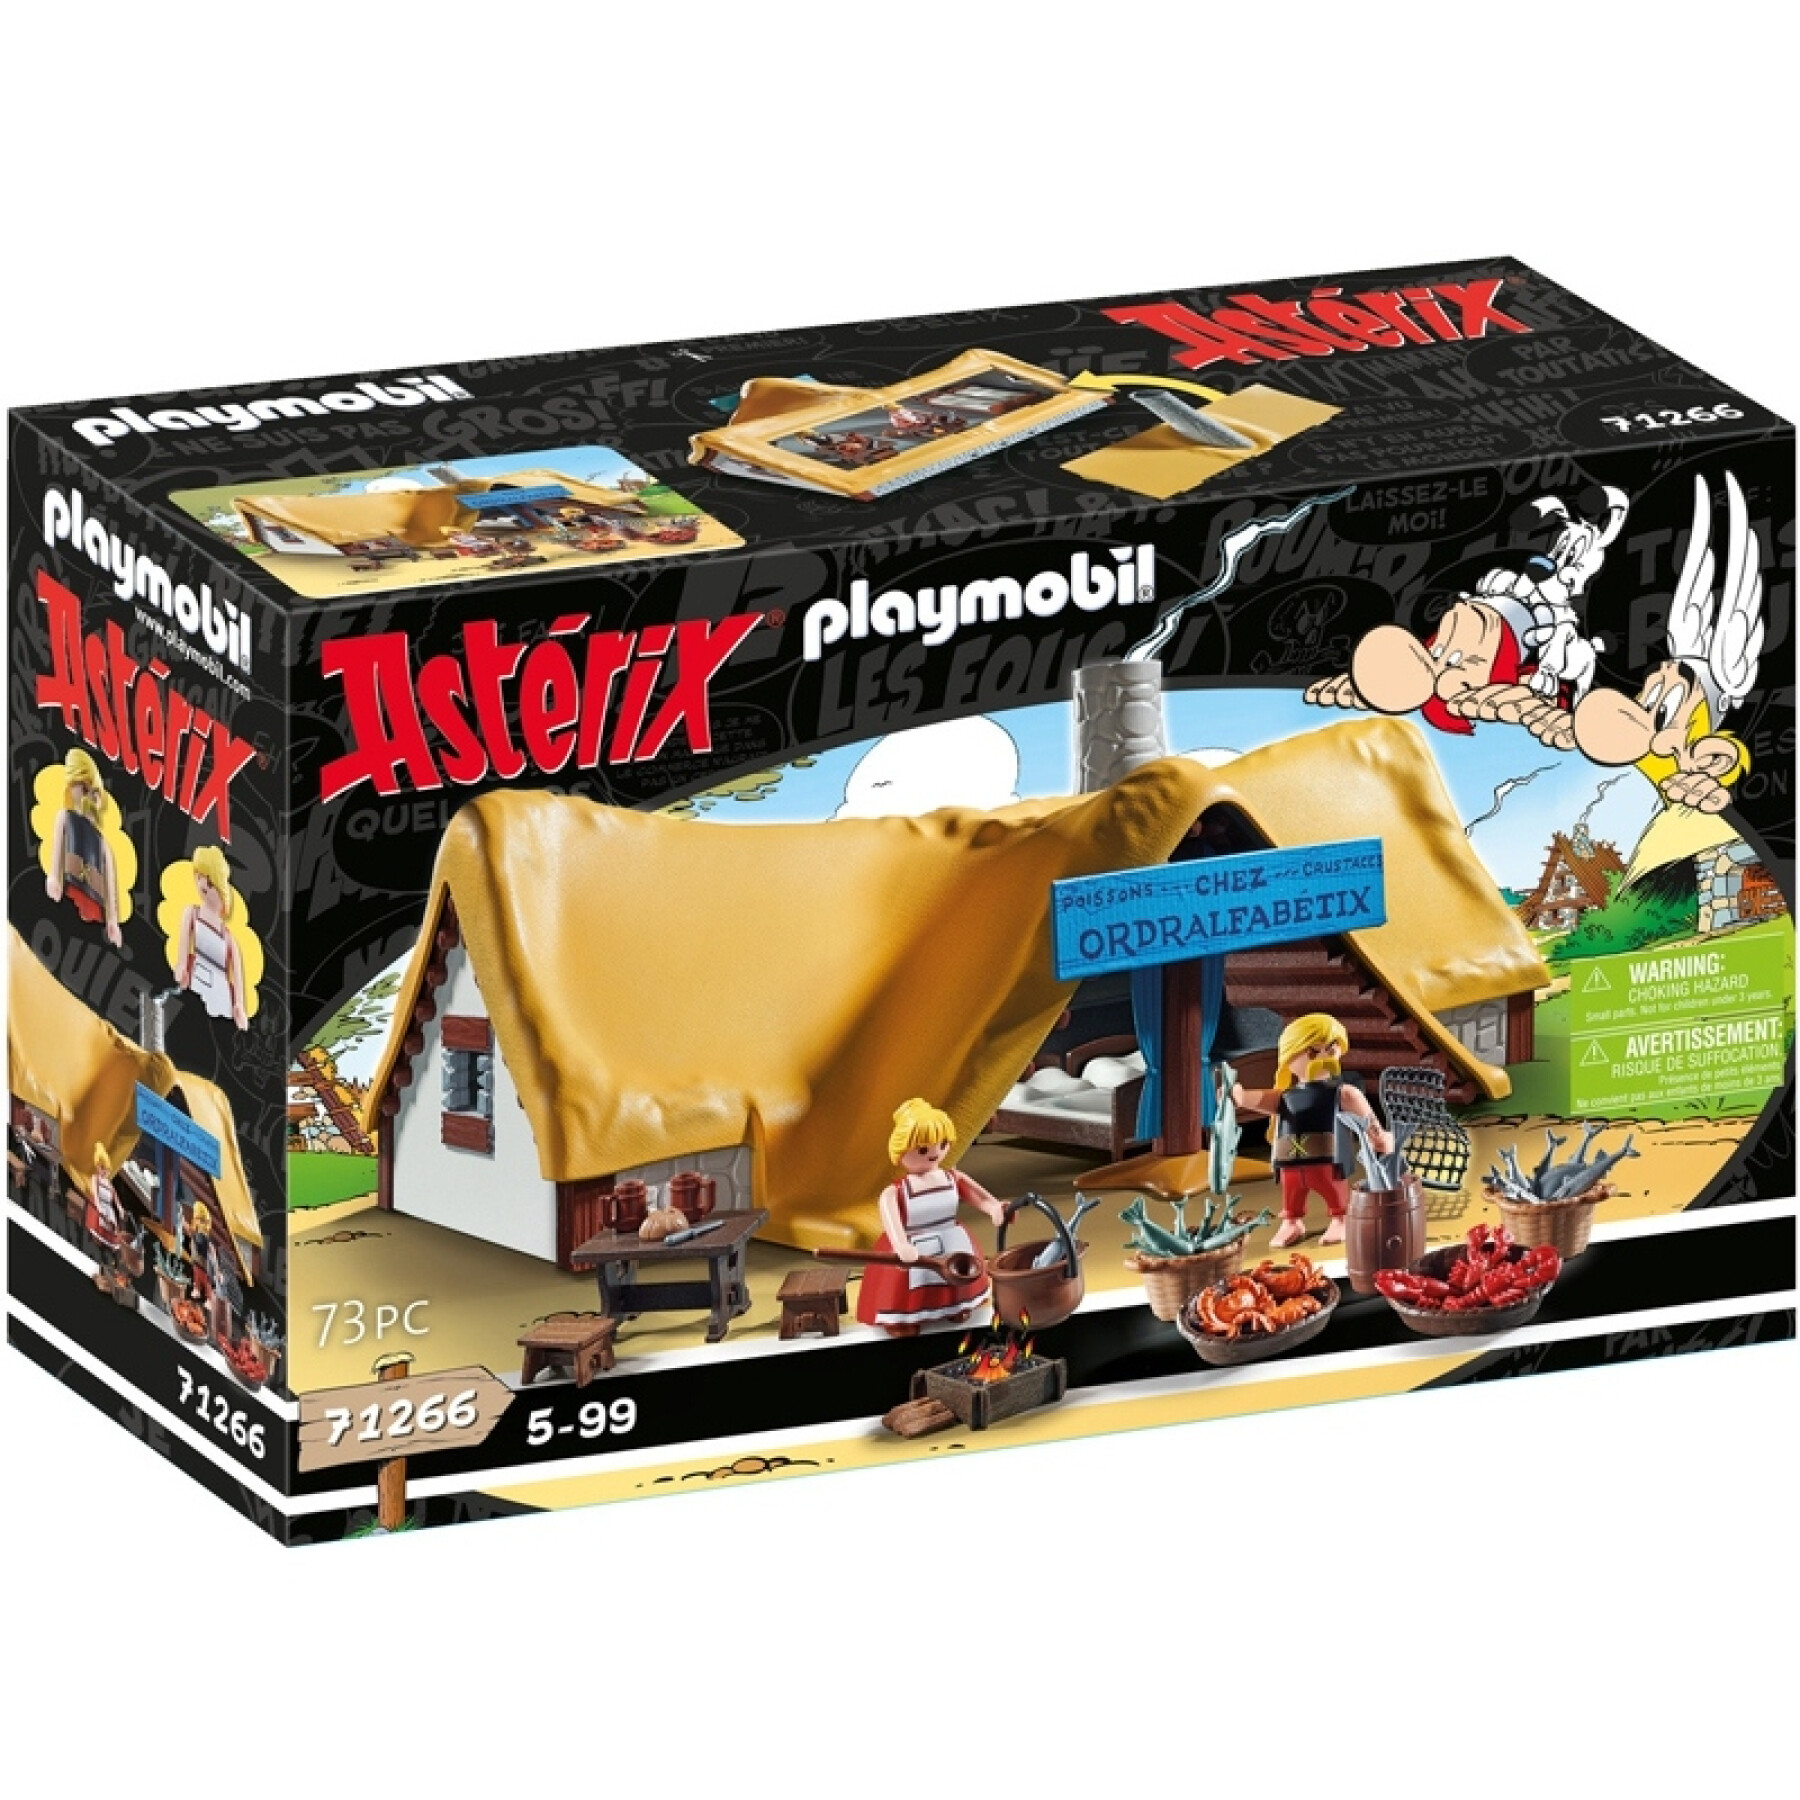 Construction games Playmobil Hutte Dordralfabetix Asterix